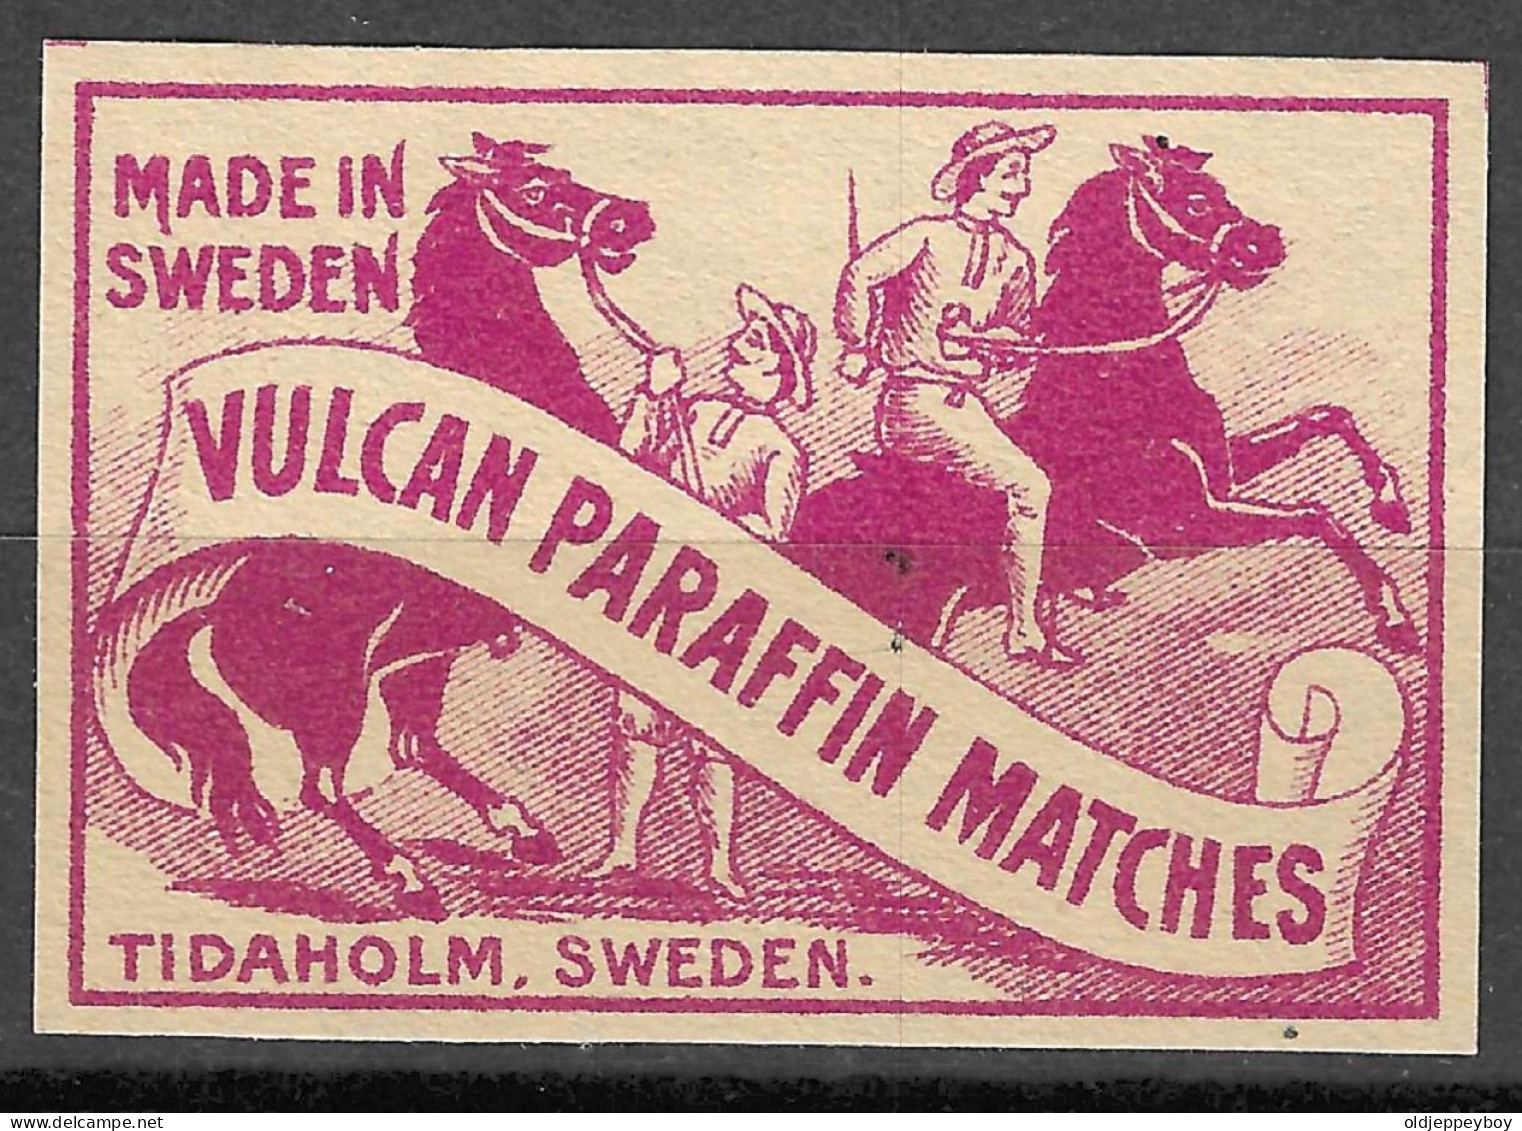  MADE  IN SWEDEN TIDAHOLM   VINTAGE Phillumeny MATCHBOX LABEL VULCAN PARAFFIN  MATCHES  5  X 3.5 CM  - Matchbox Labels